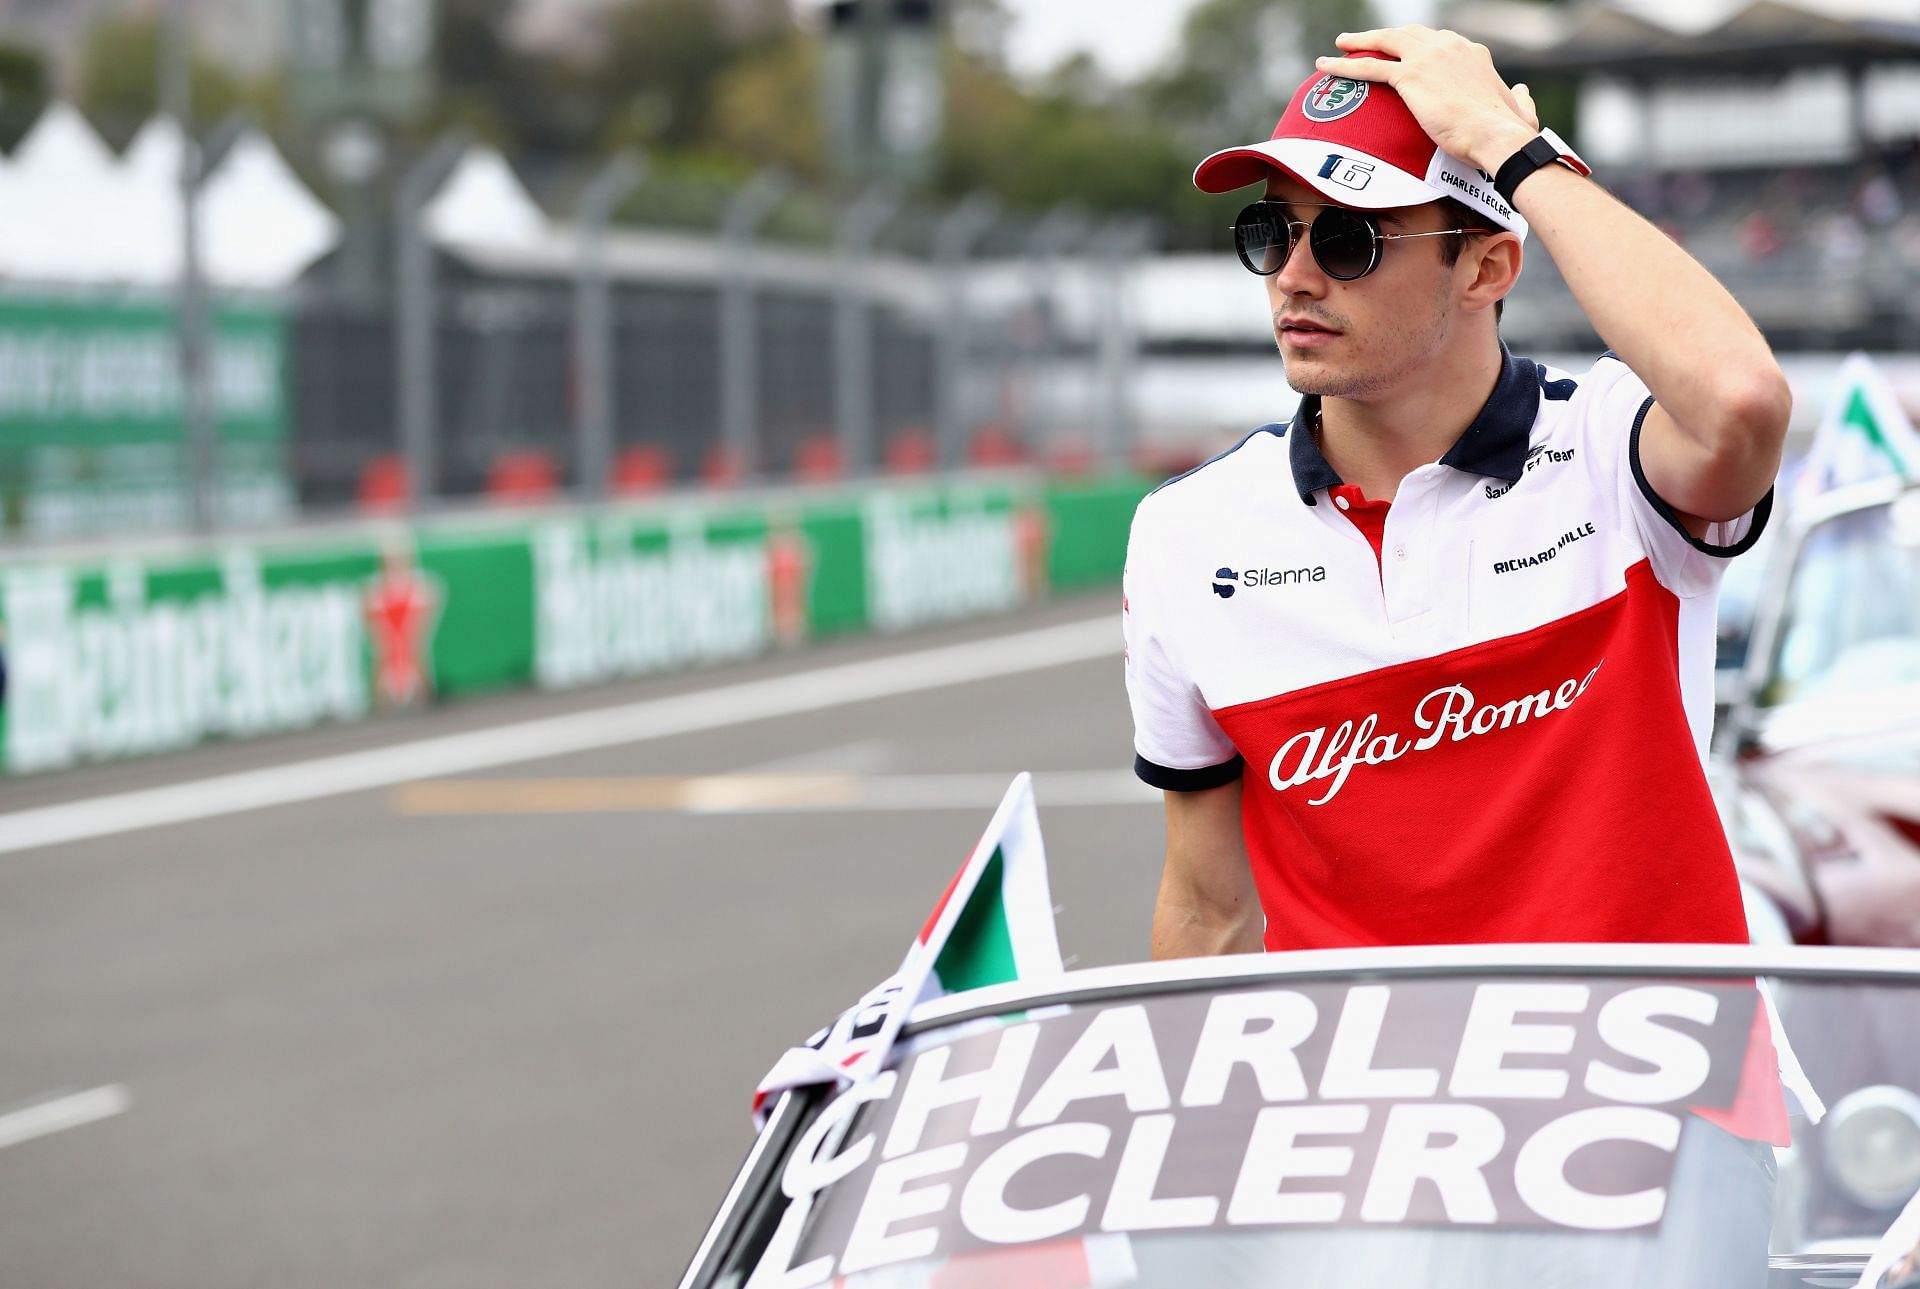 Charles Leclerc made an immediate splash in F1 in his debut season